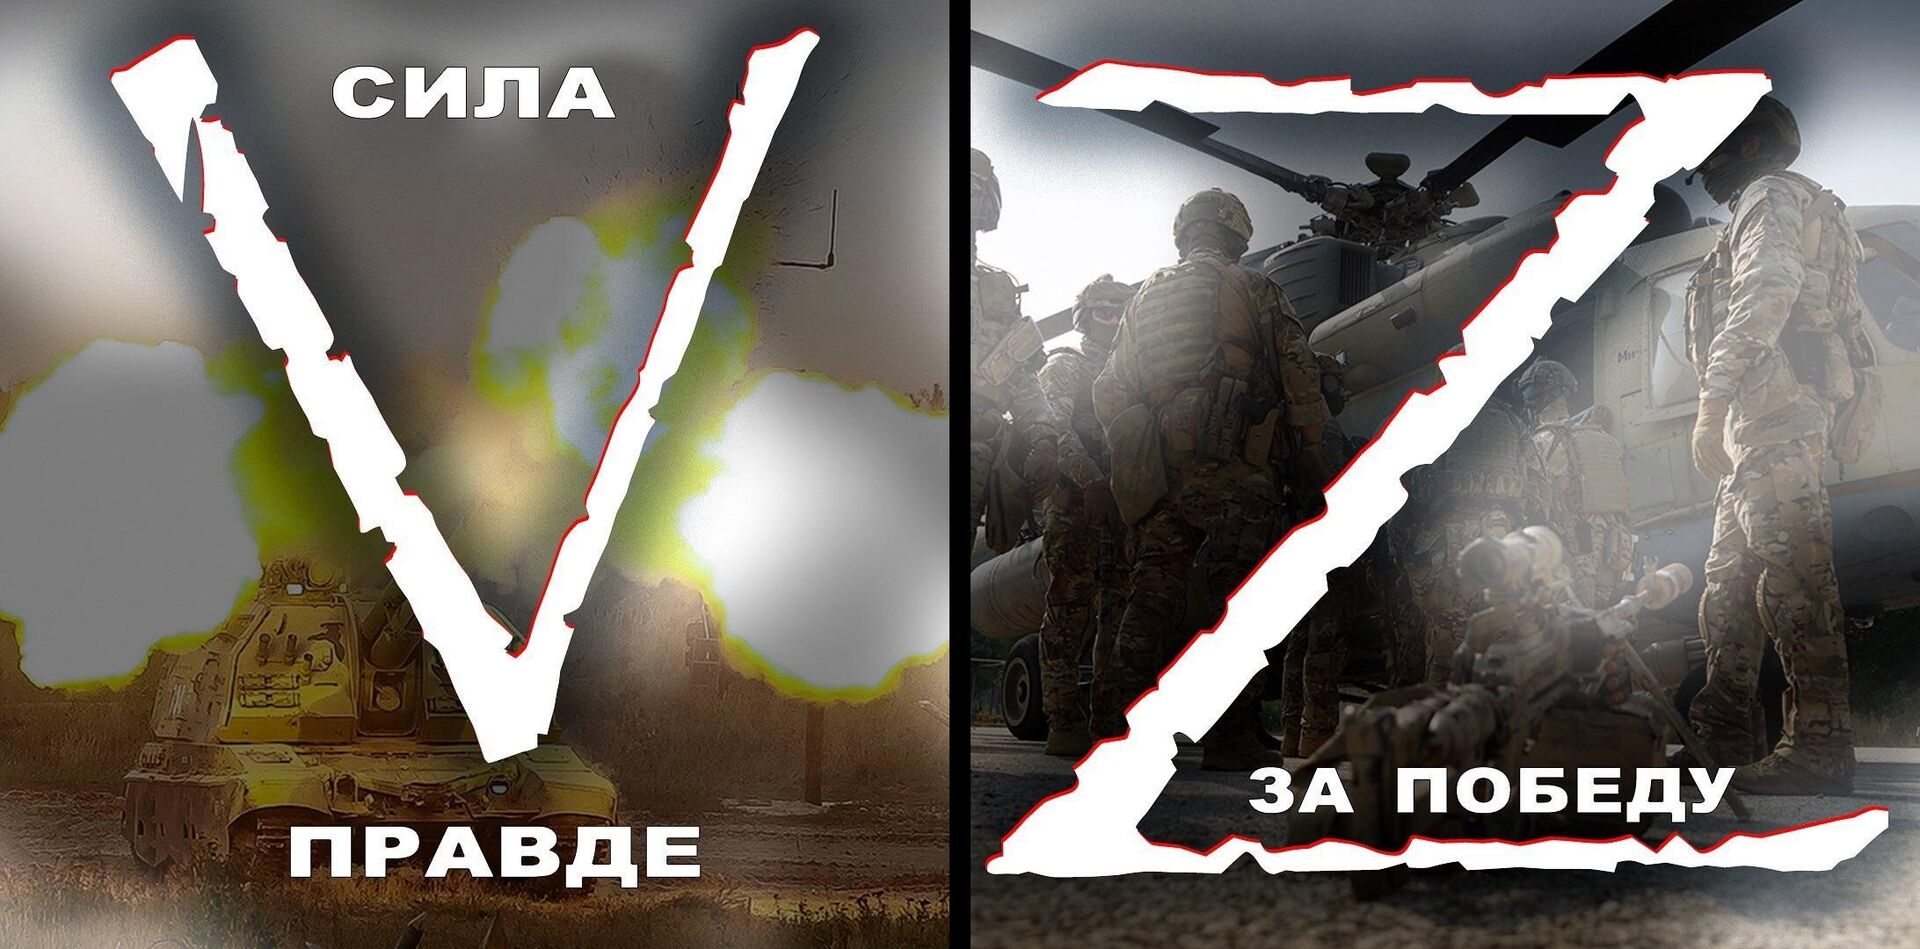 “Z运动”：俄军装备上的识别标志，如何变成顿巴斯的自由象征 - 2022年3月3日, 俄罗斯卫星通讯社